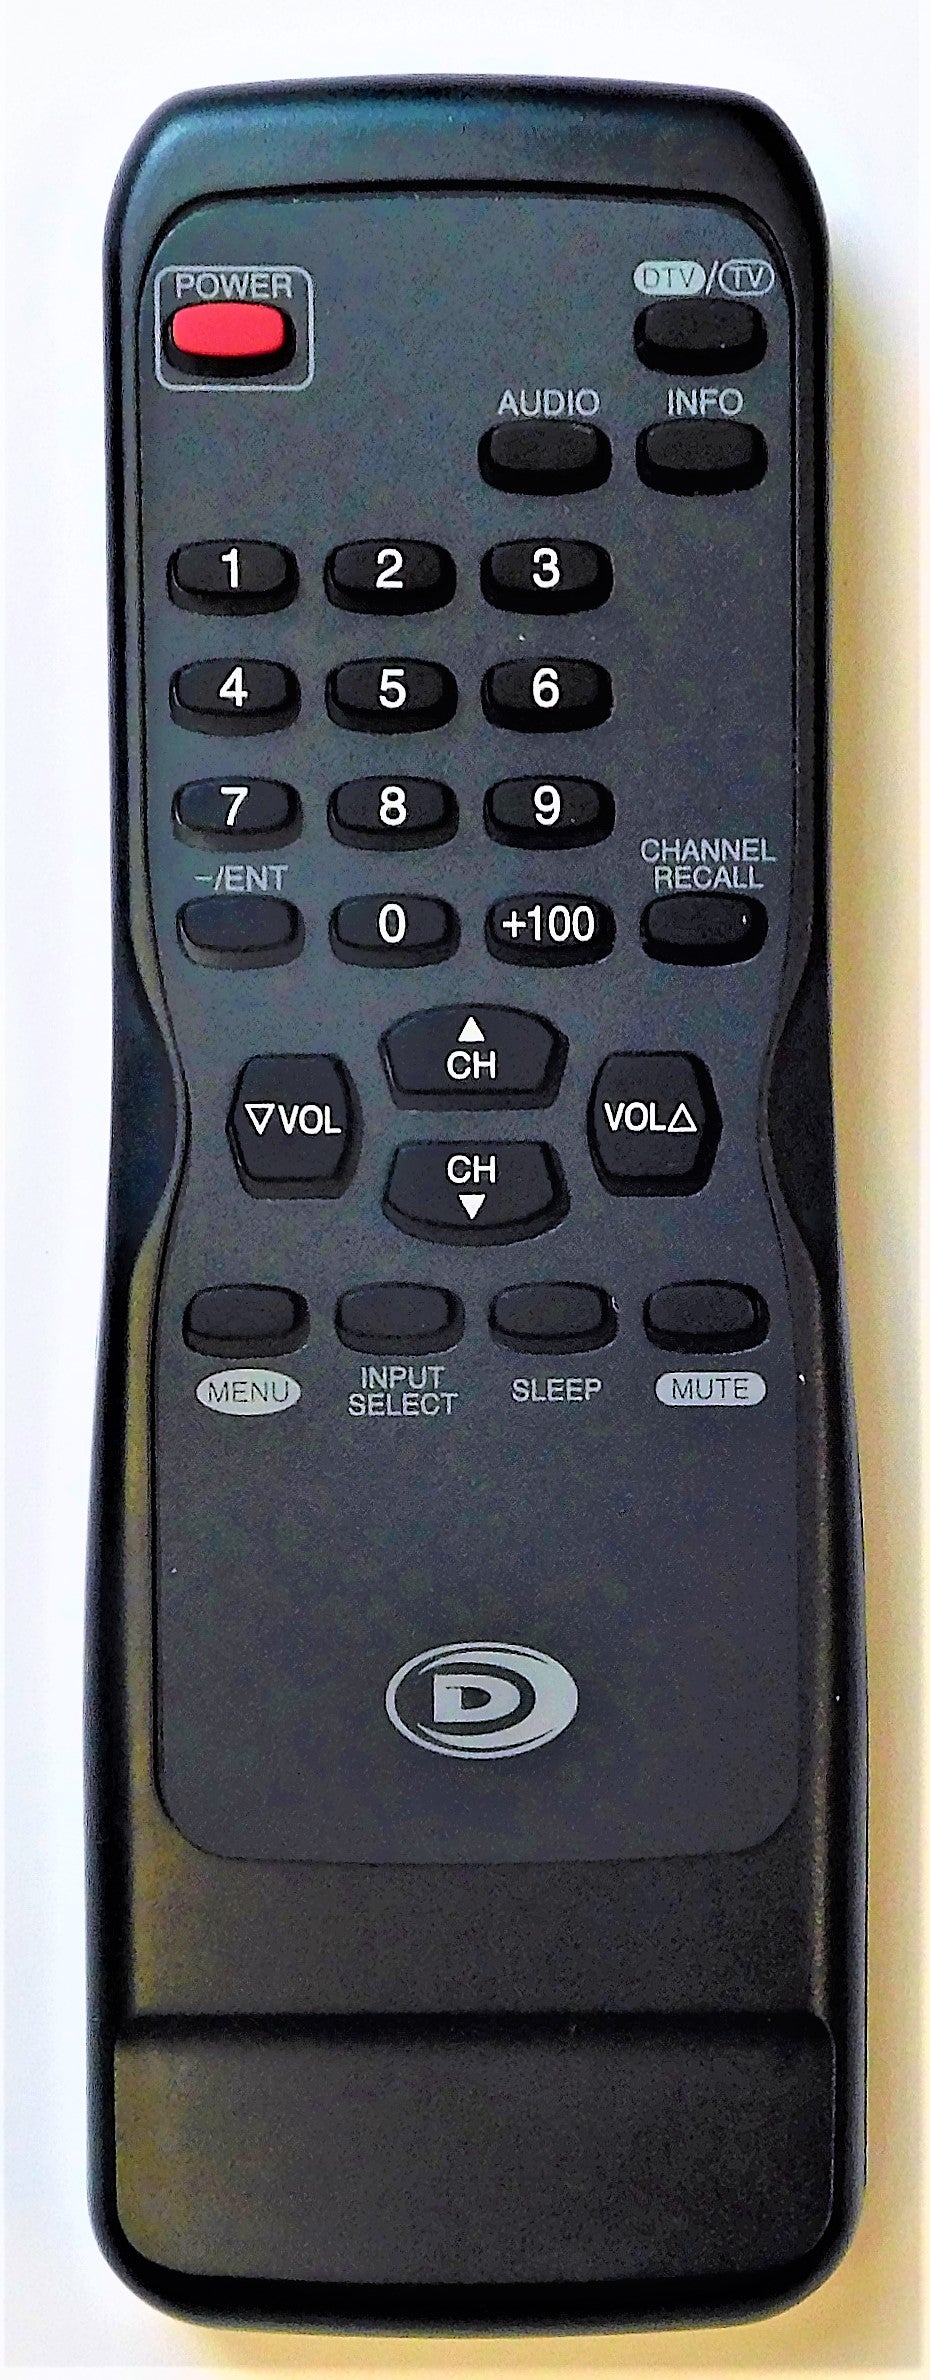 OEM replacement remote control for Durabrand CRT TVs NE612UE